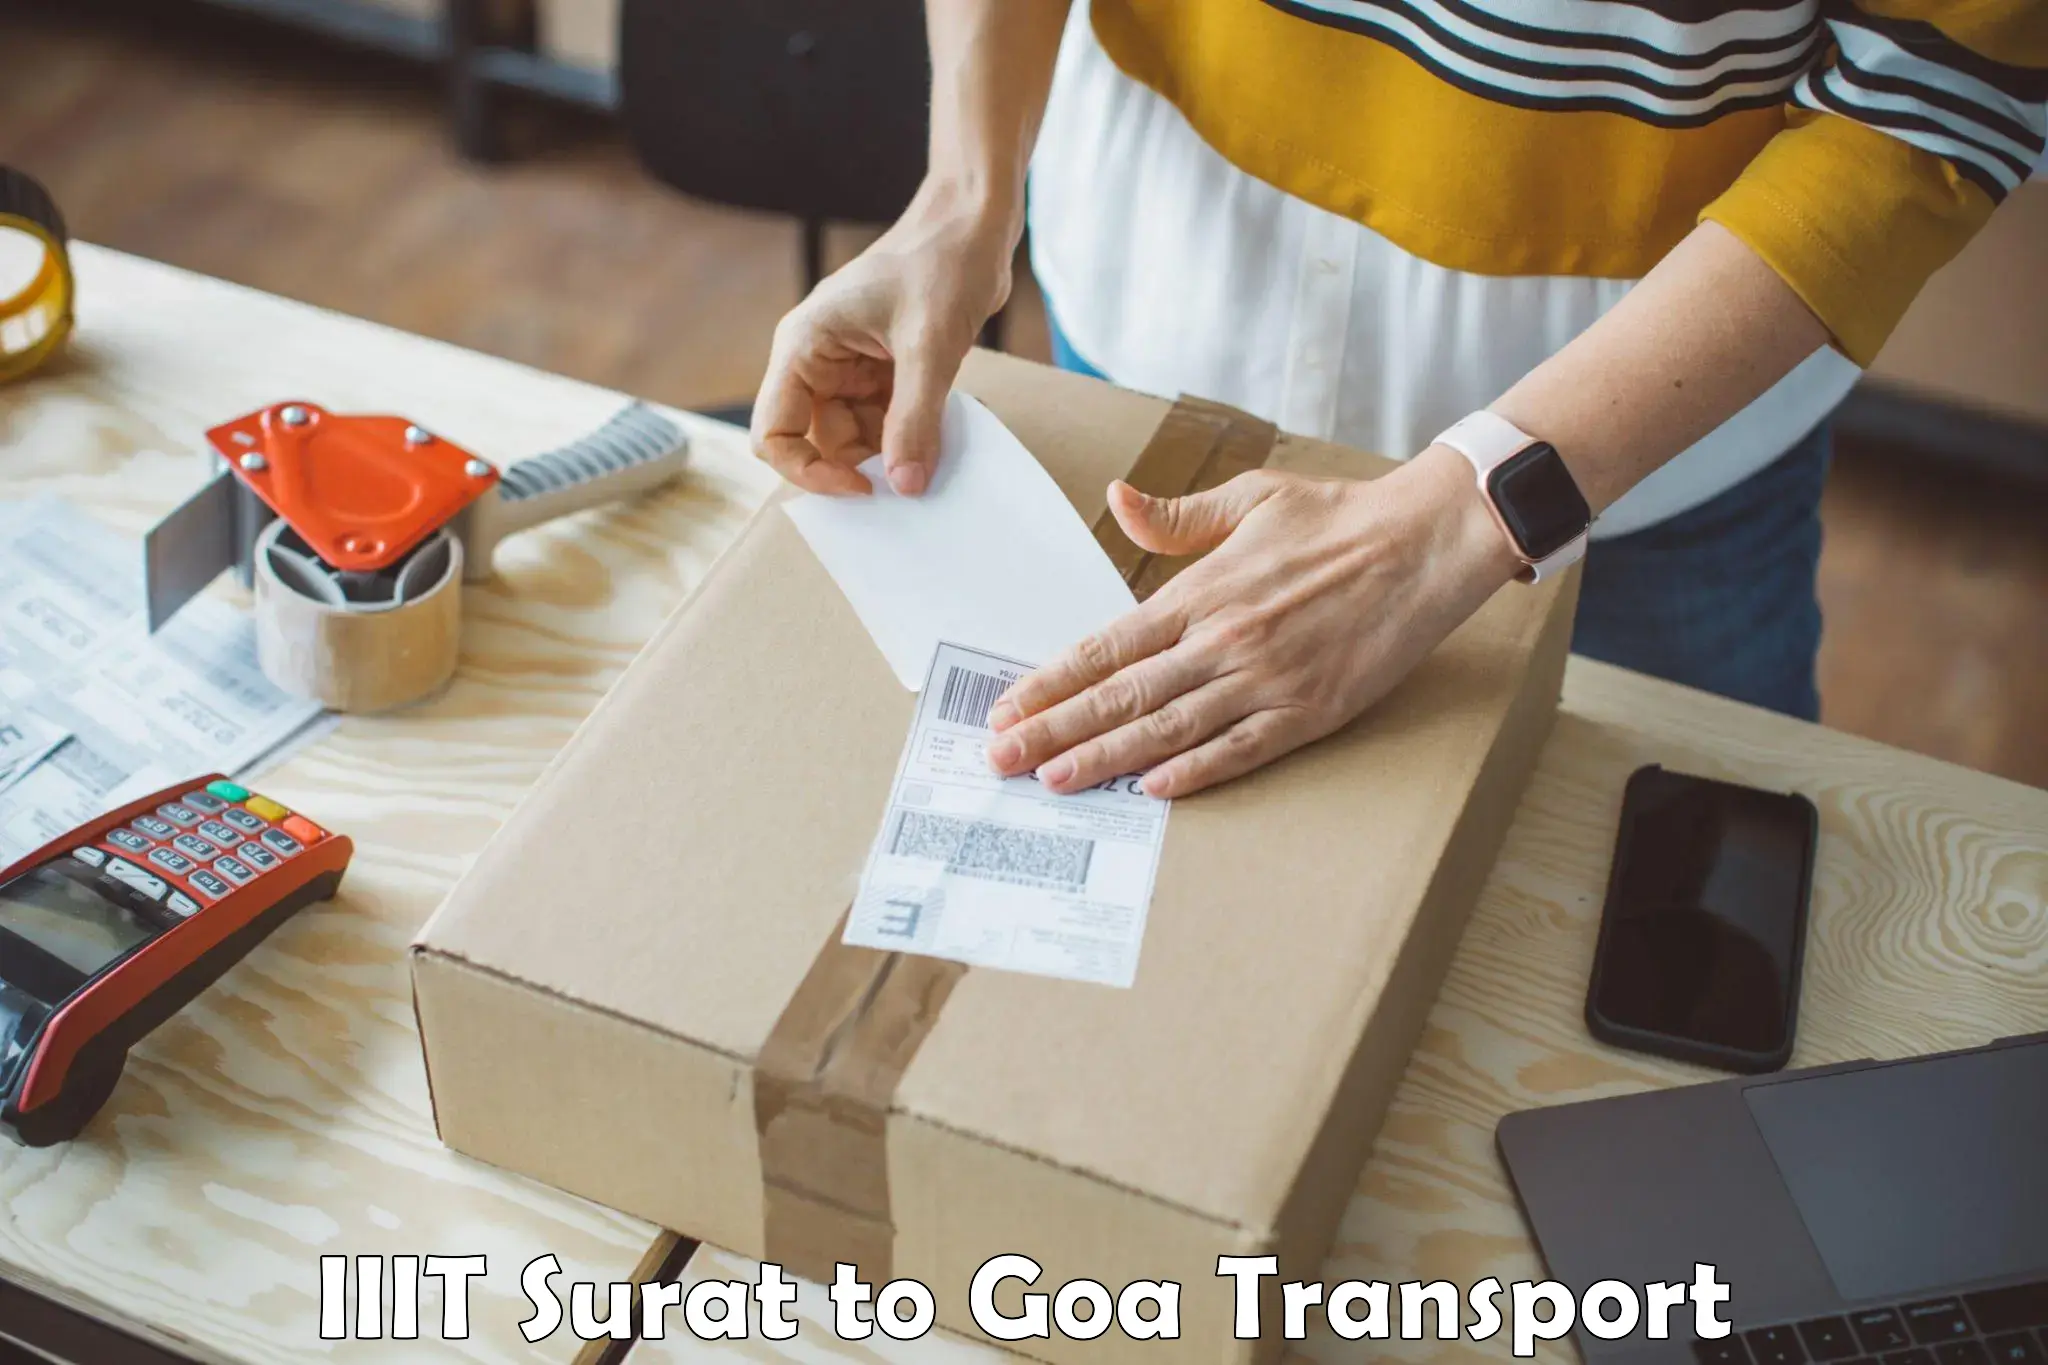 Transport in sharing IIIT Surat to Vasco da Gama